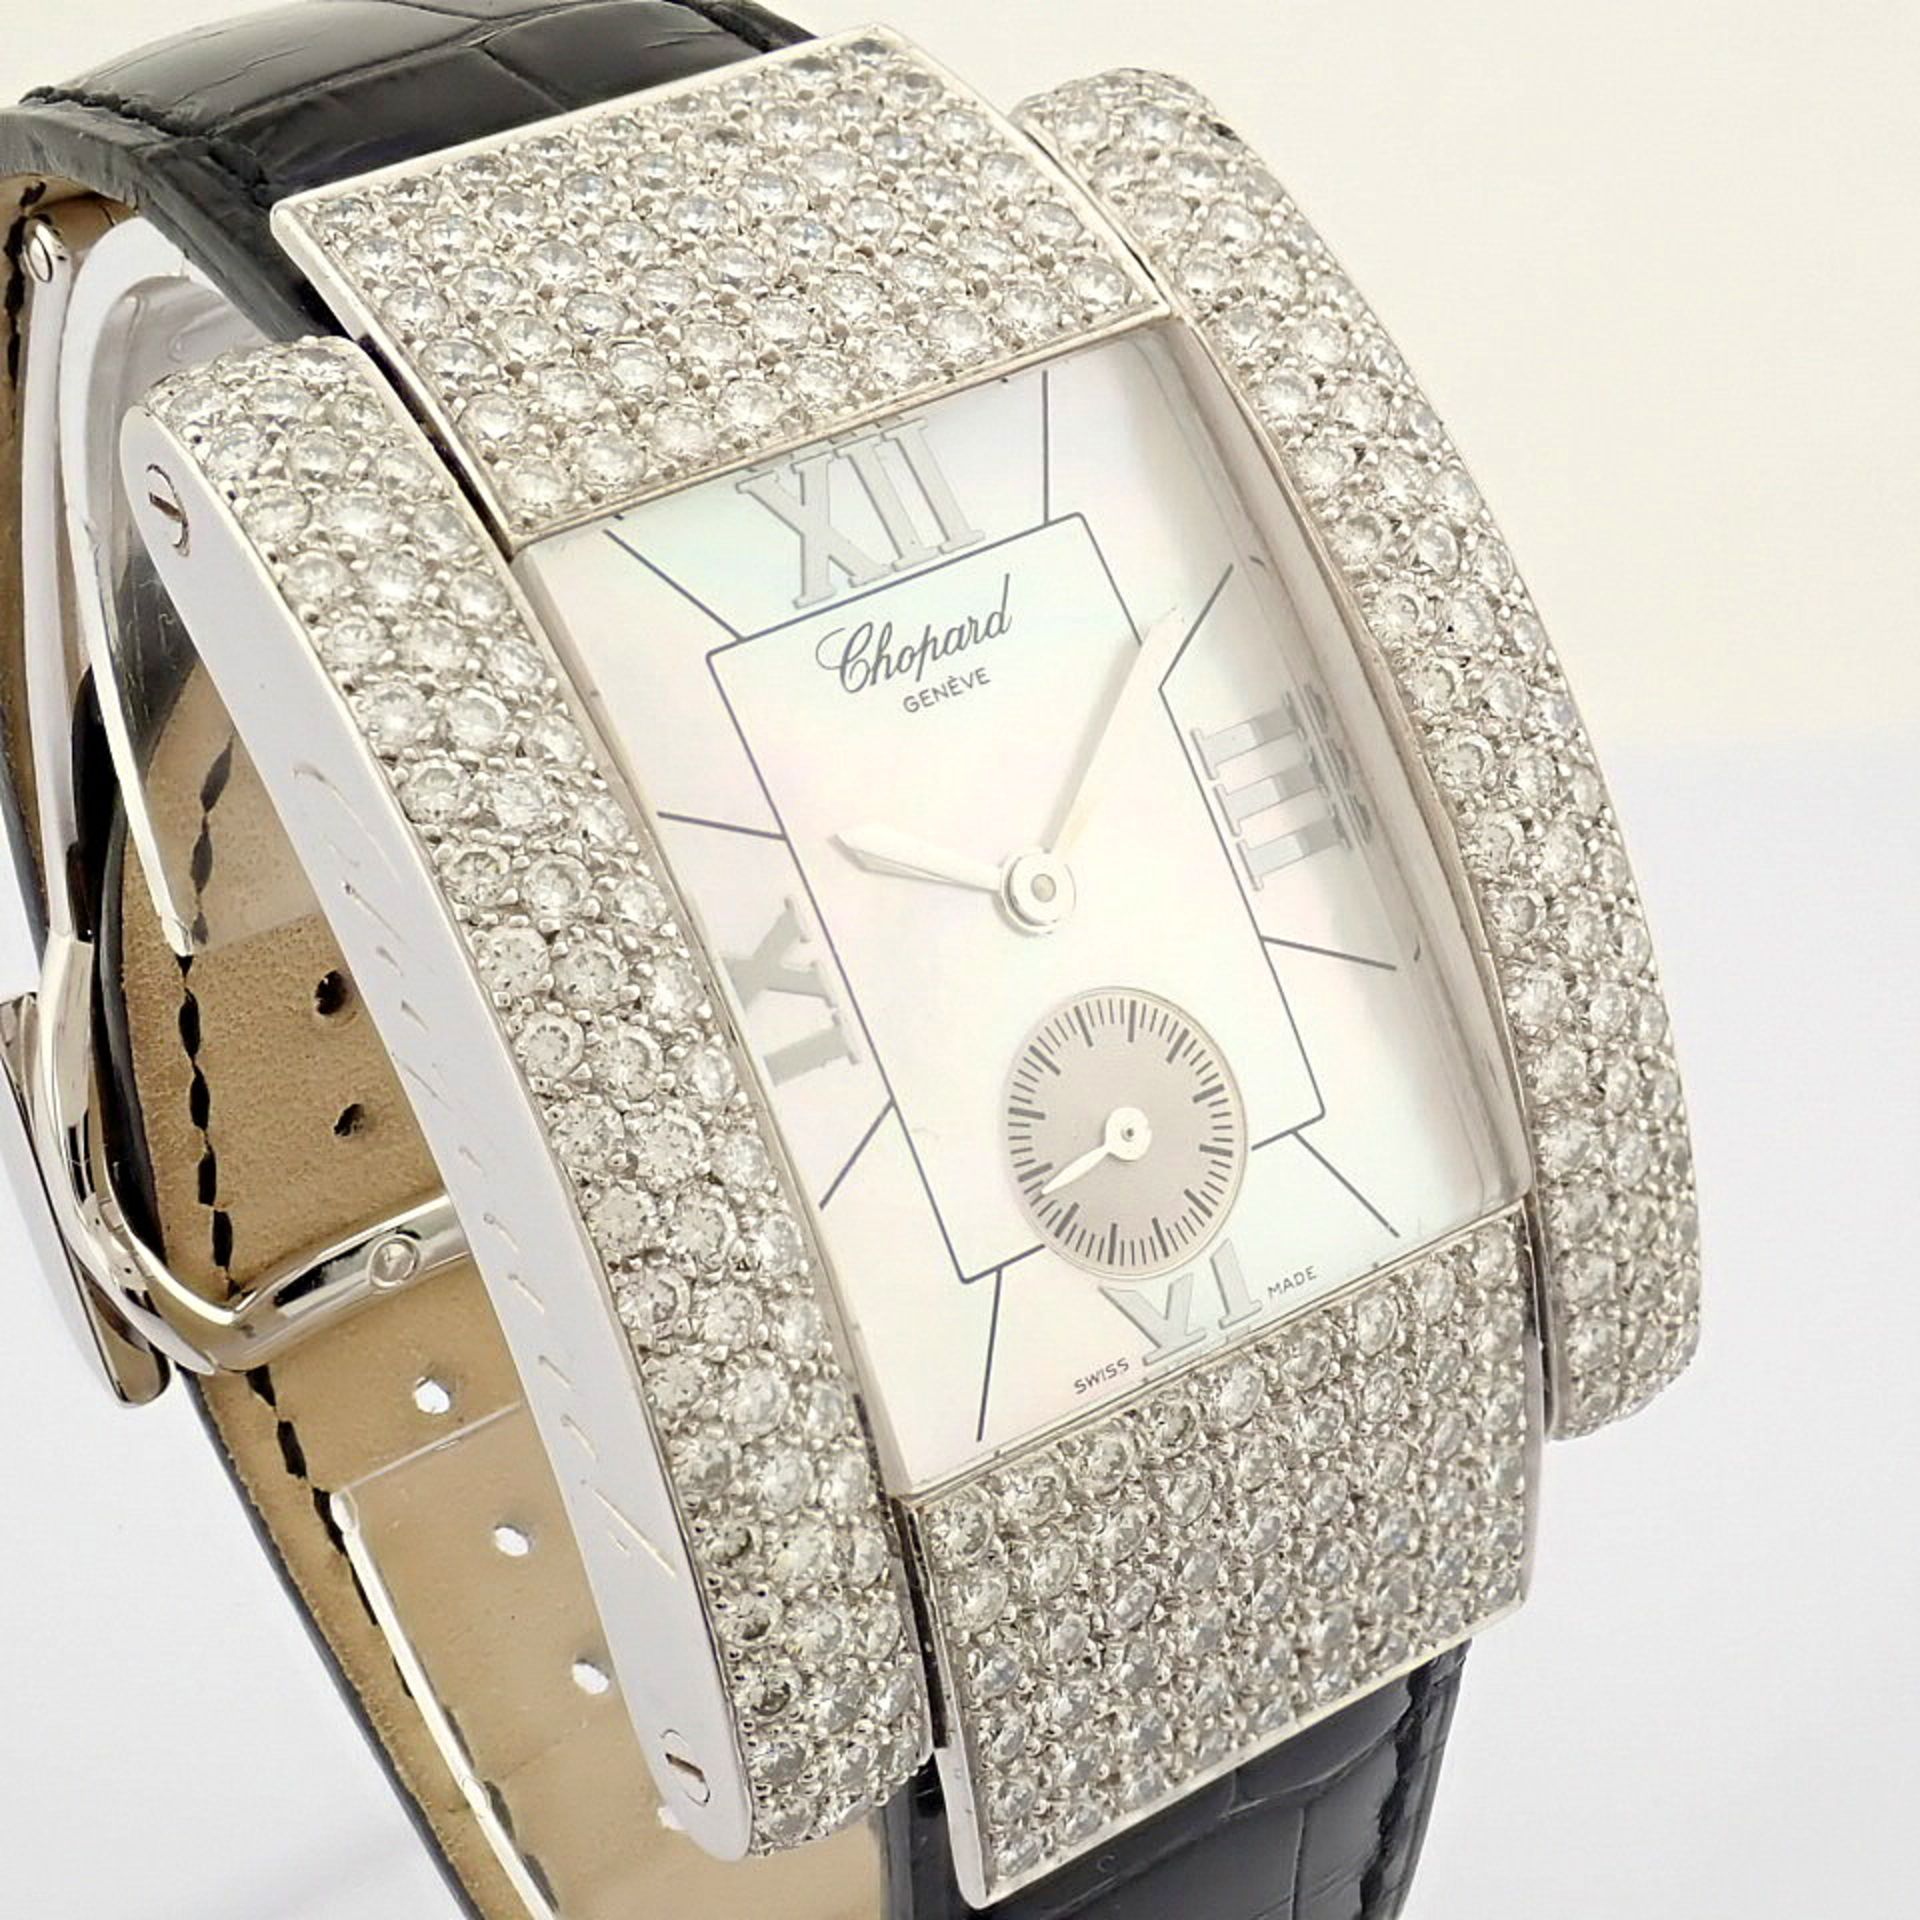 Chopard / La Strada - Lady's 18K White Gold Wrist Watch - Image 7 of 13